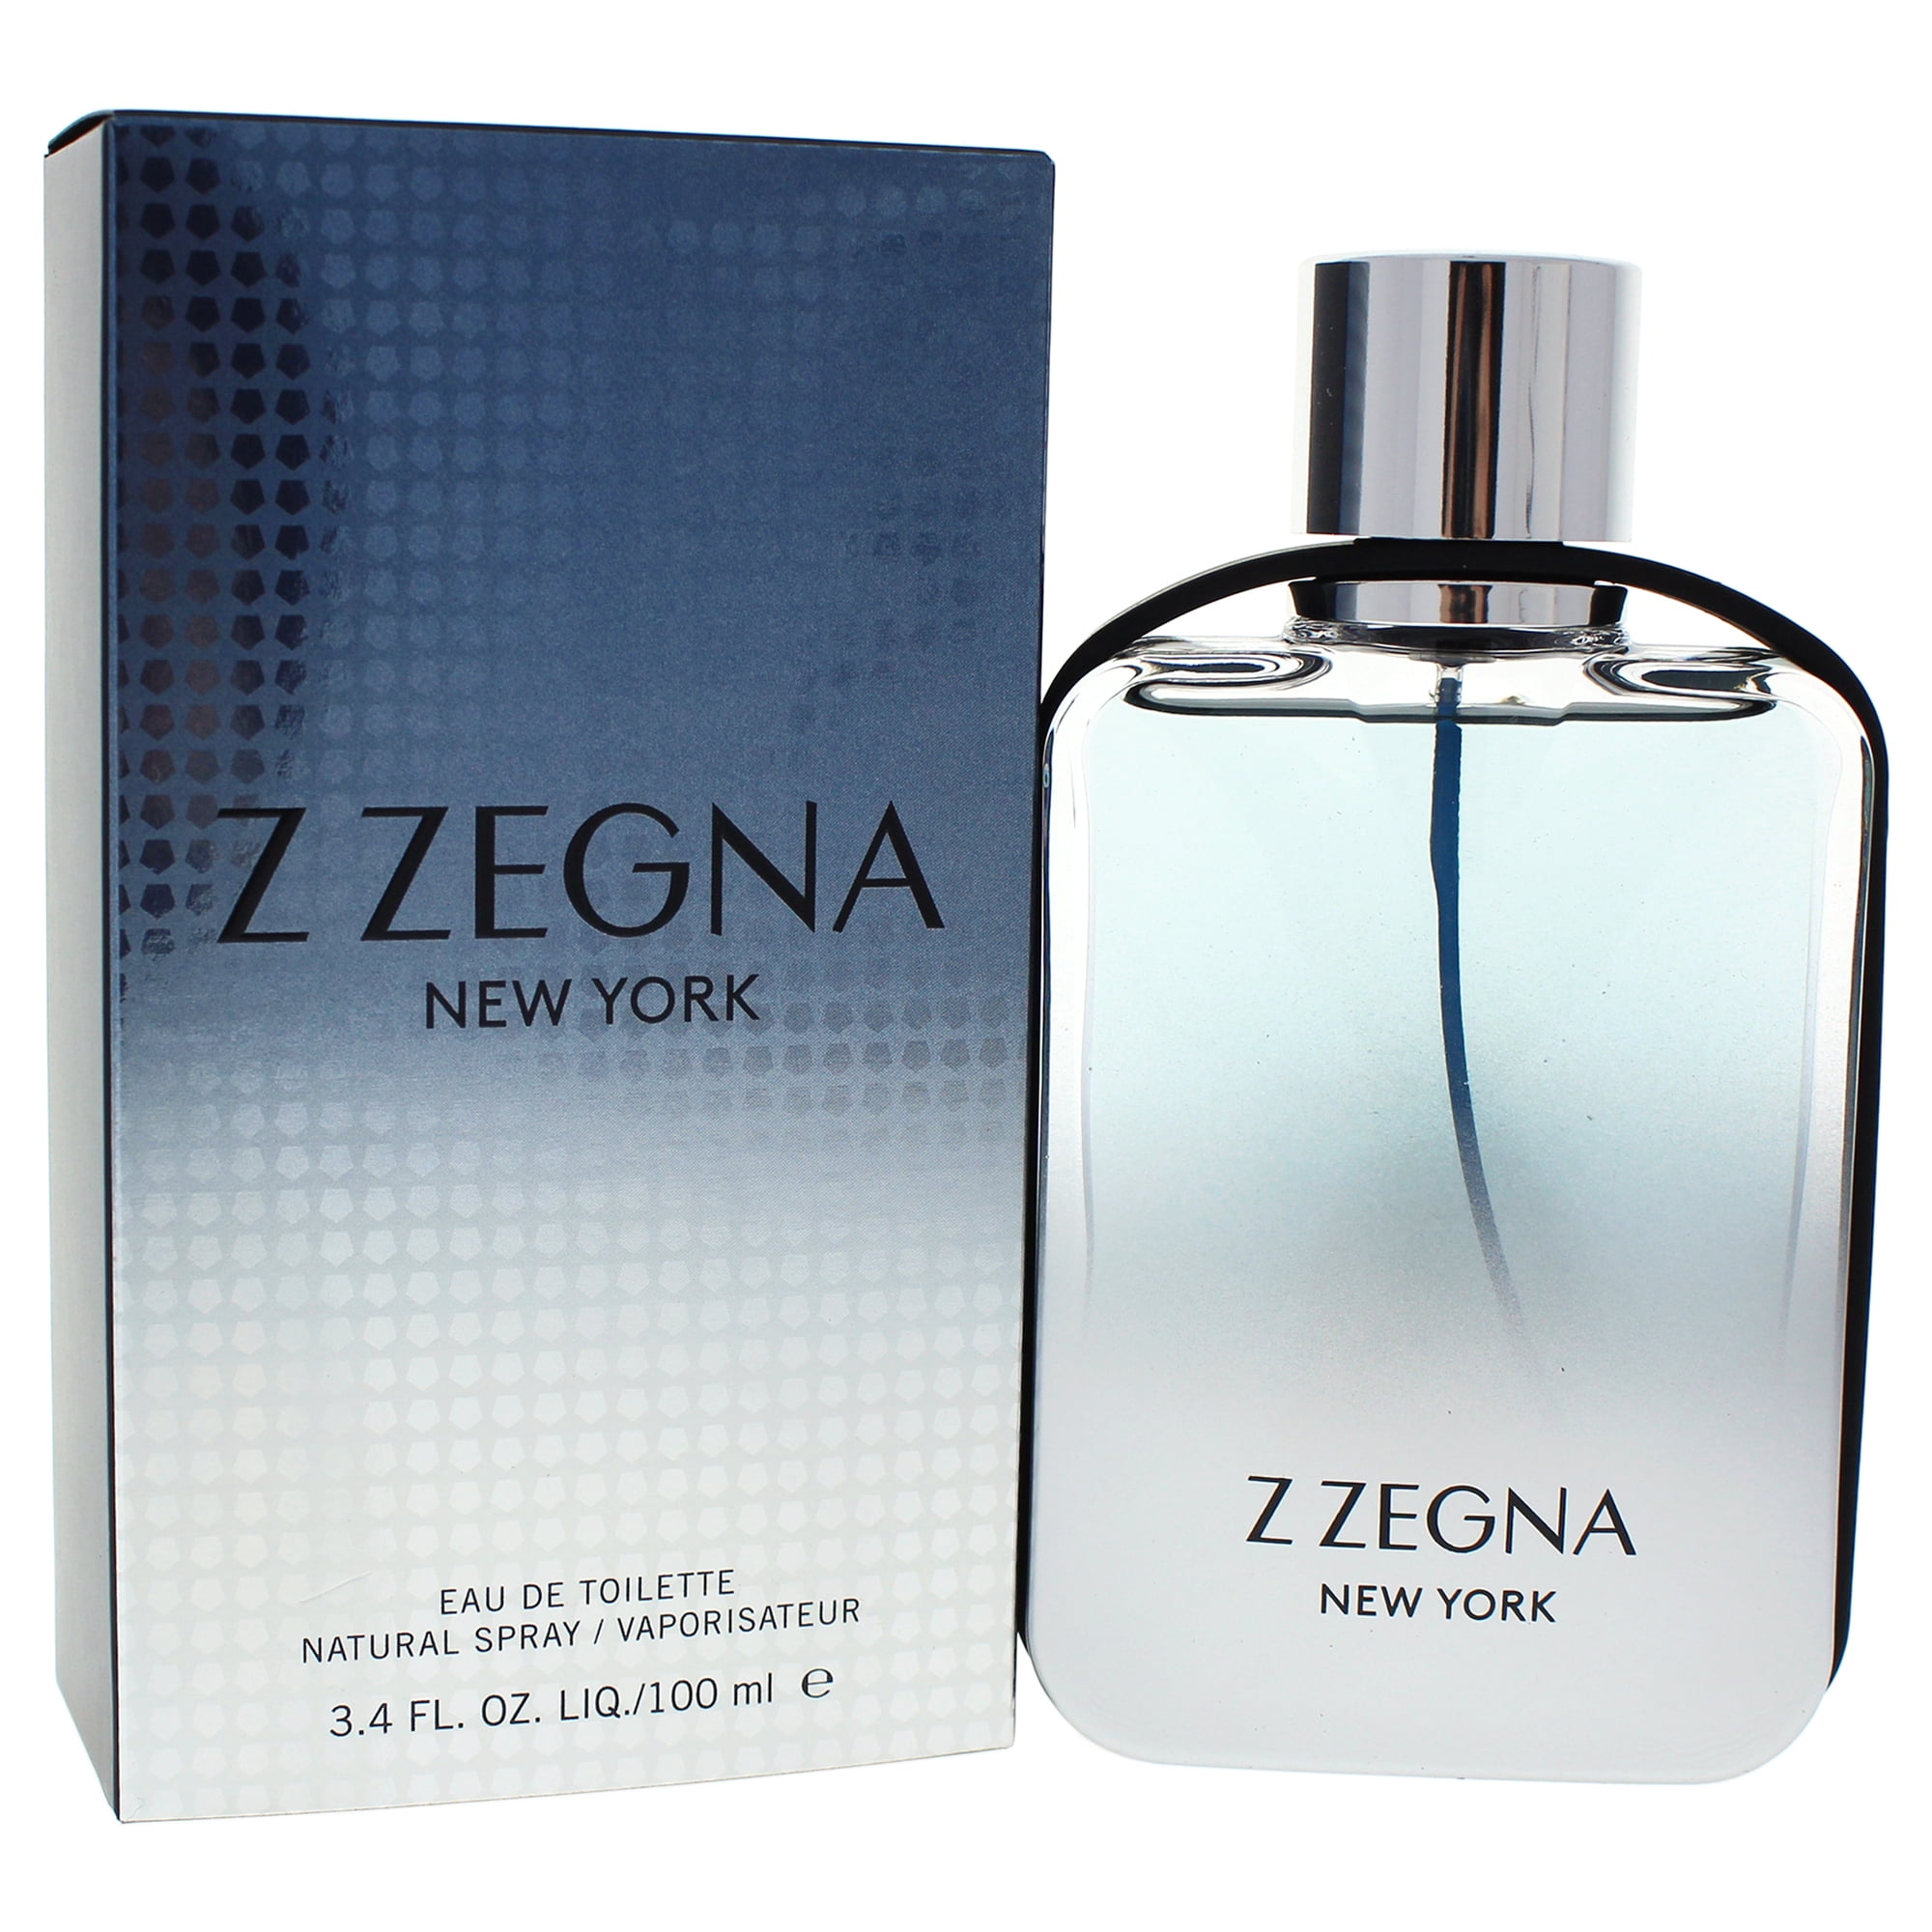 Z Zegna New York by Ermenegildo Zegna for Men - 3.4 oz EDT Spray